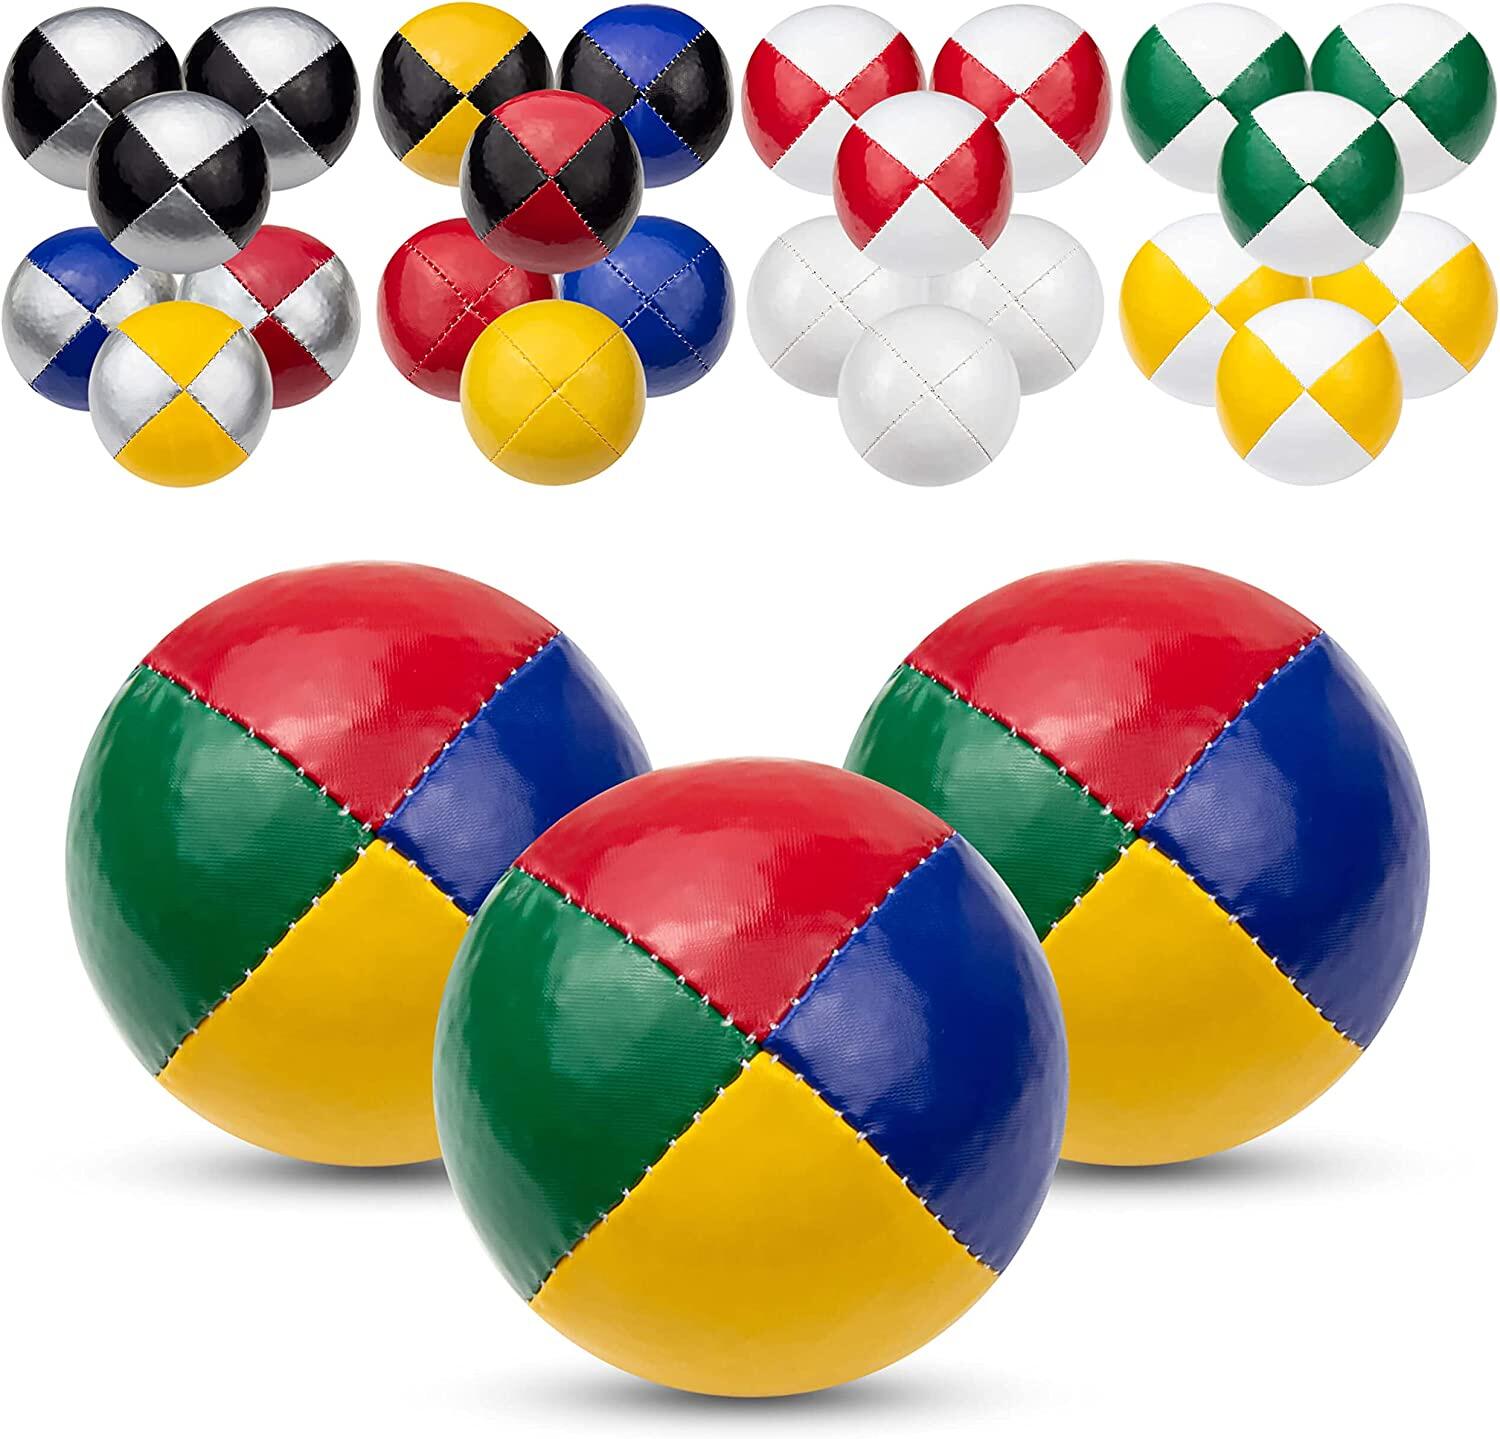 Juggle Dream 3x Pro Thud Juggling Balls - Set of 3 Professional Juggling Balls w 2/5